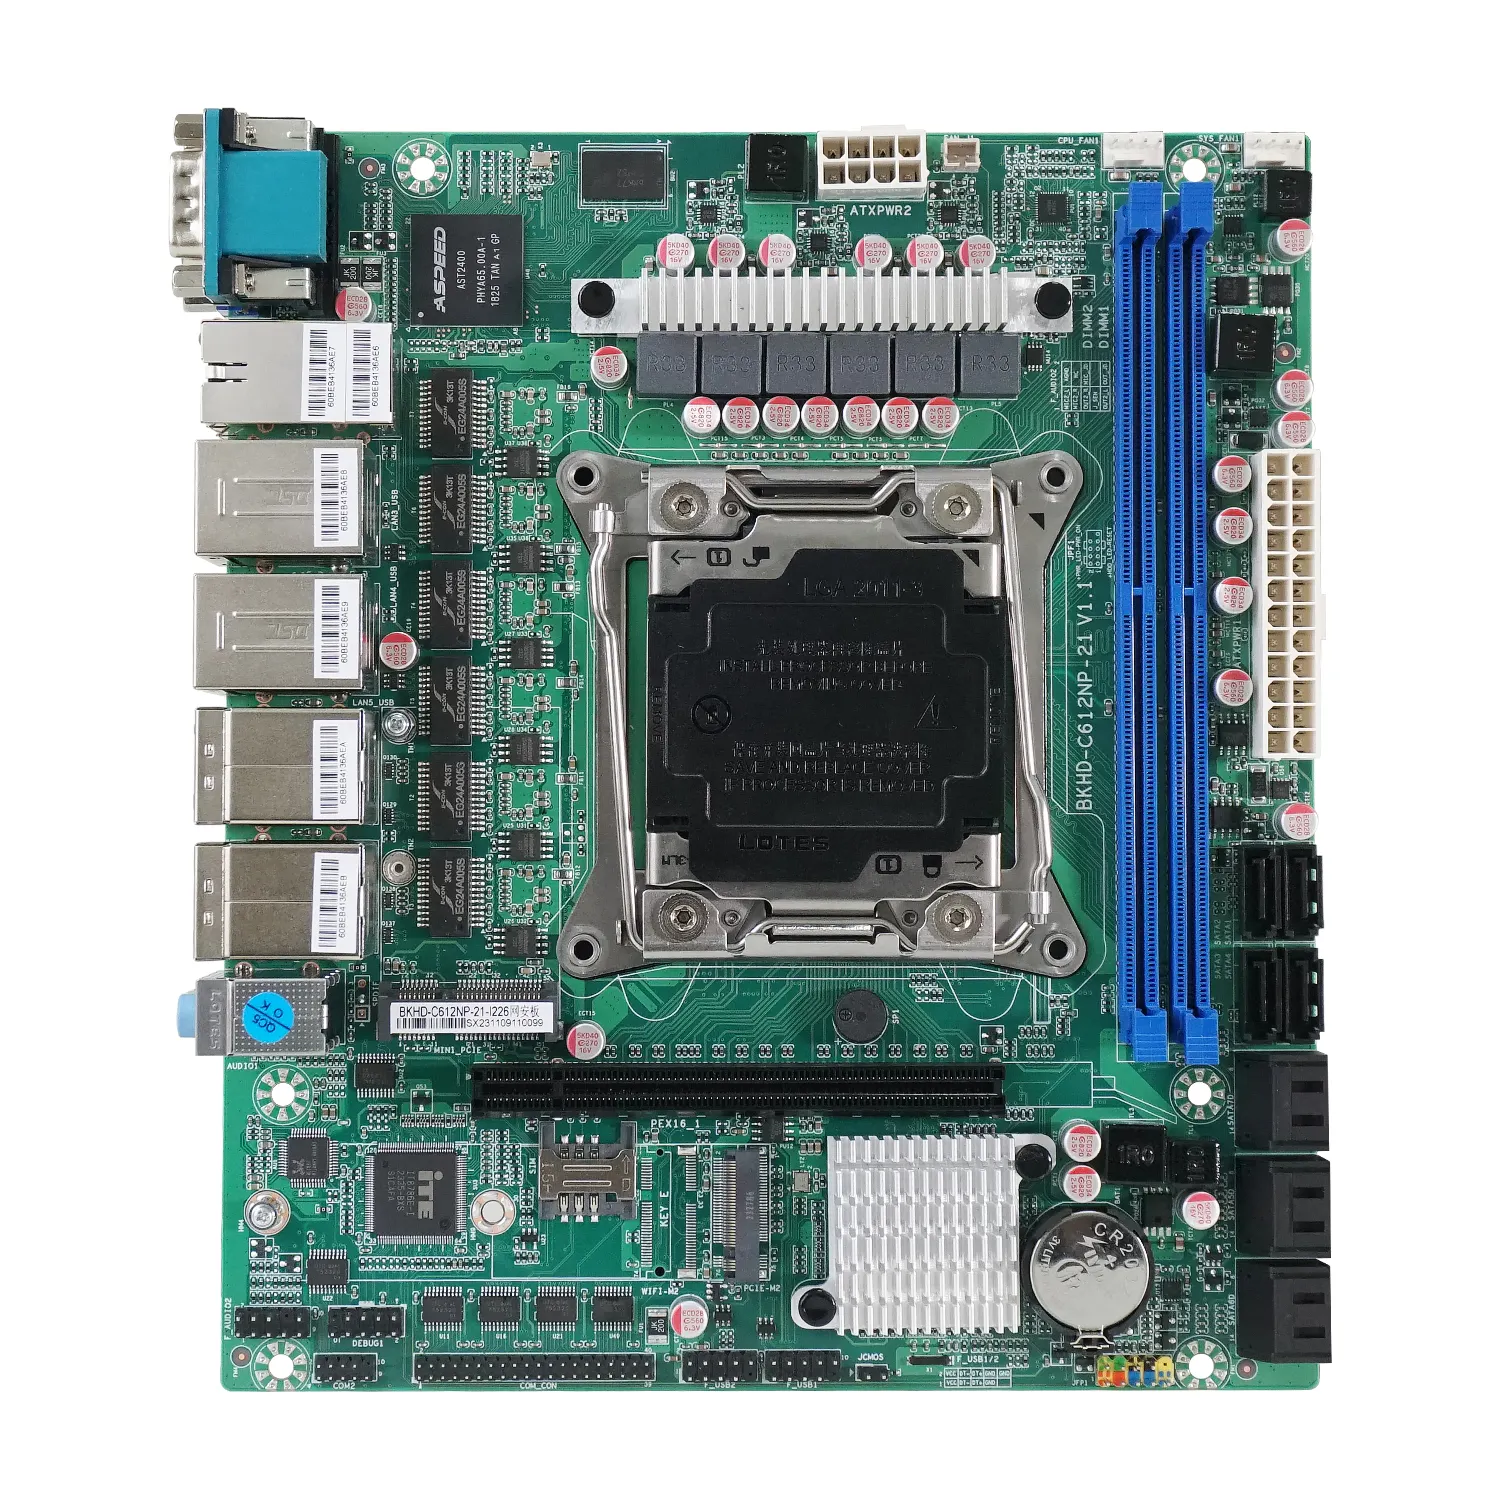 Placa base de enrutamiento suave E NAS ITX matriz de disco duro intercambiable en caliente almacenamiento RAID computadora industrial servidor E5 C612